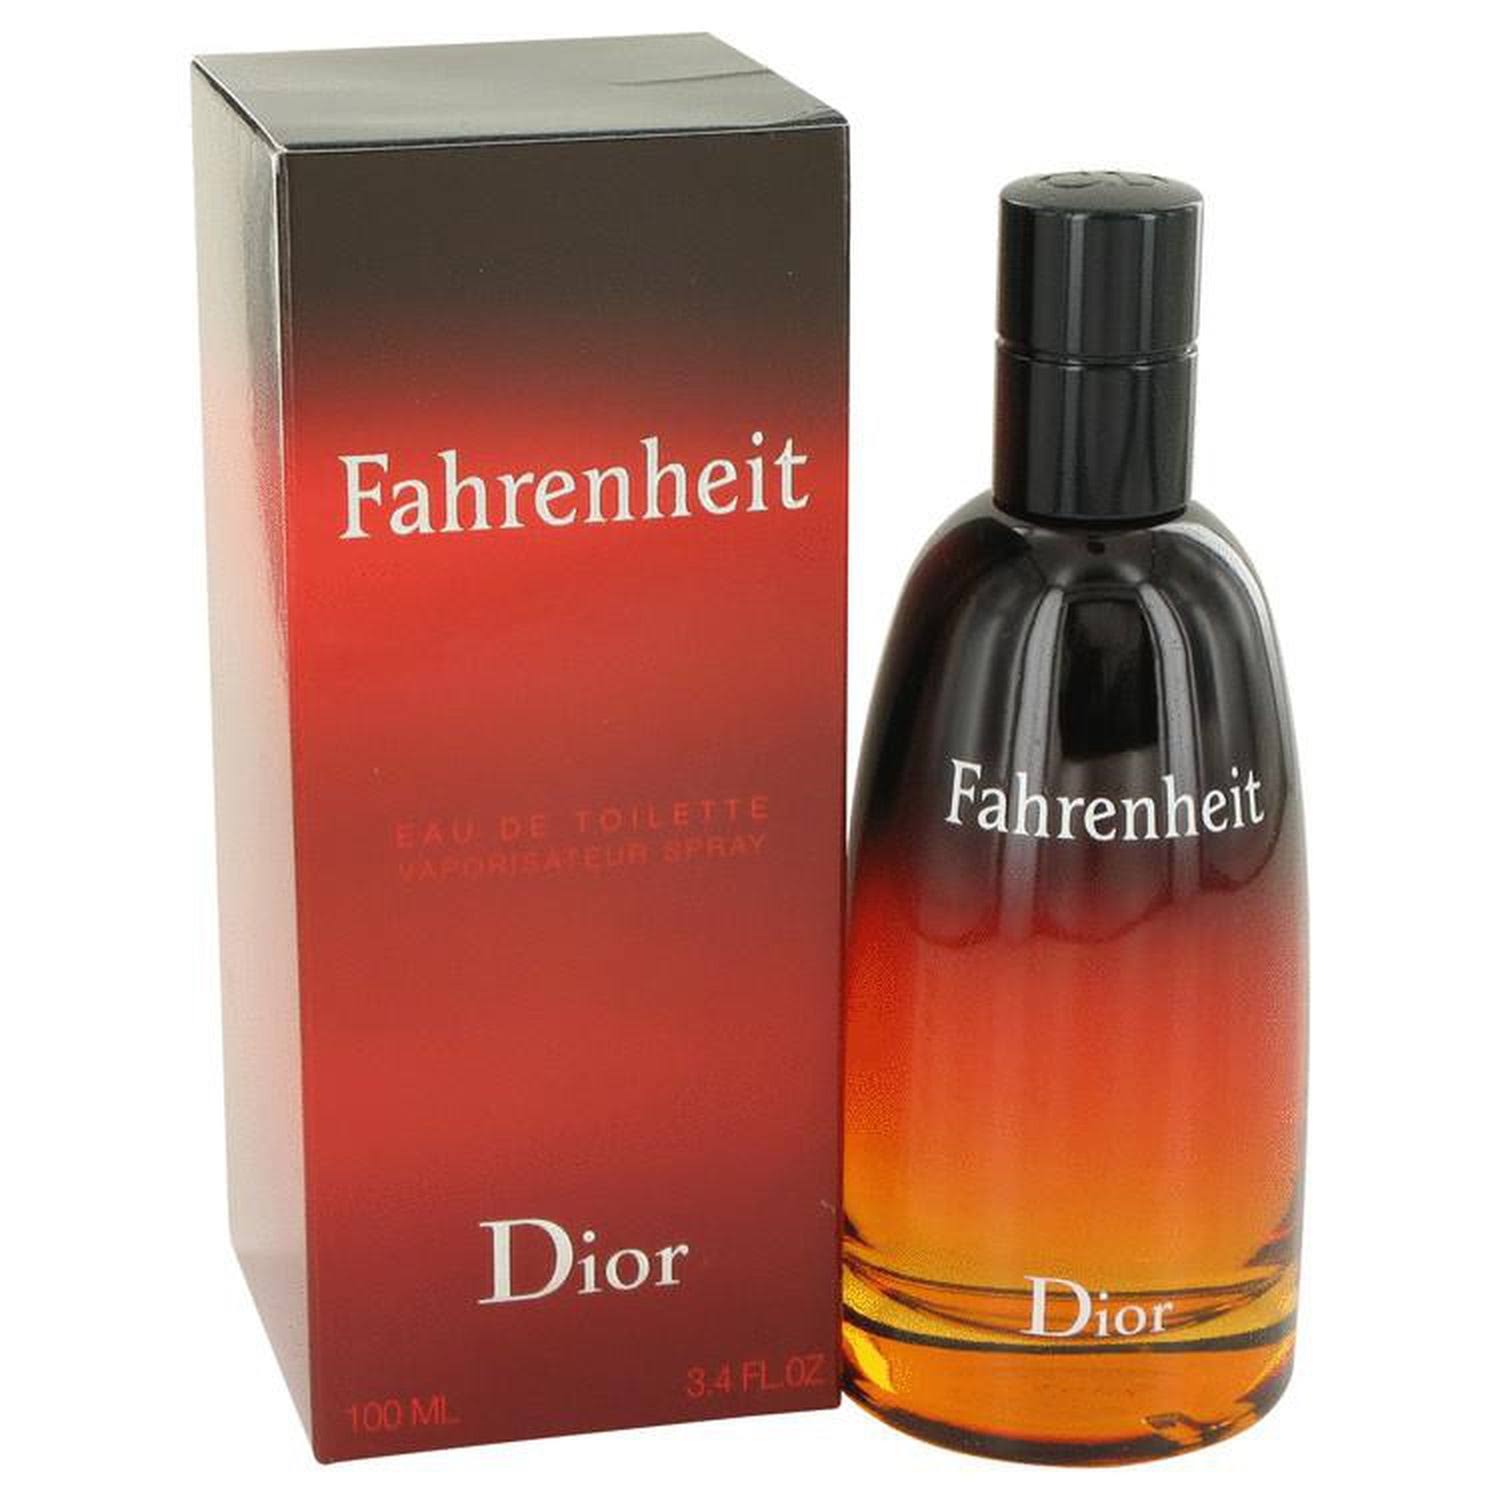 FAHRENHEIT by Christian Dior Eau De Toilette Spray 3.4 oz